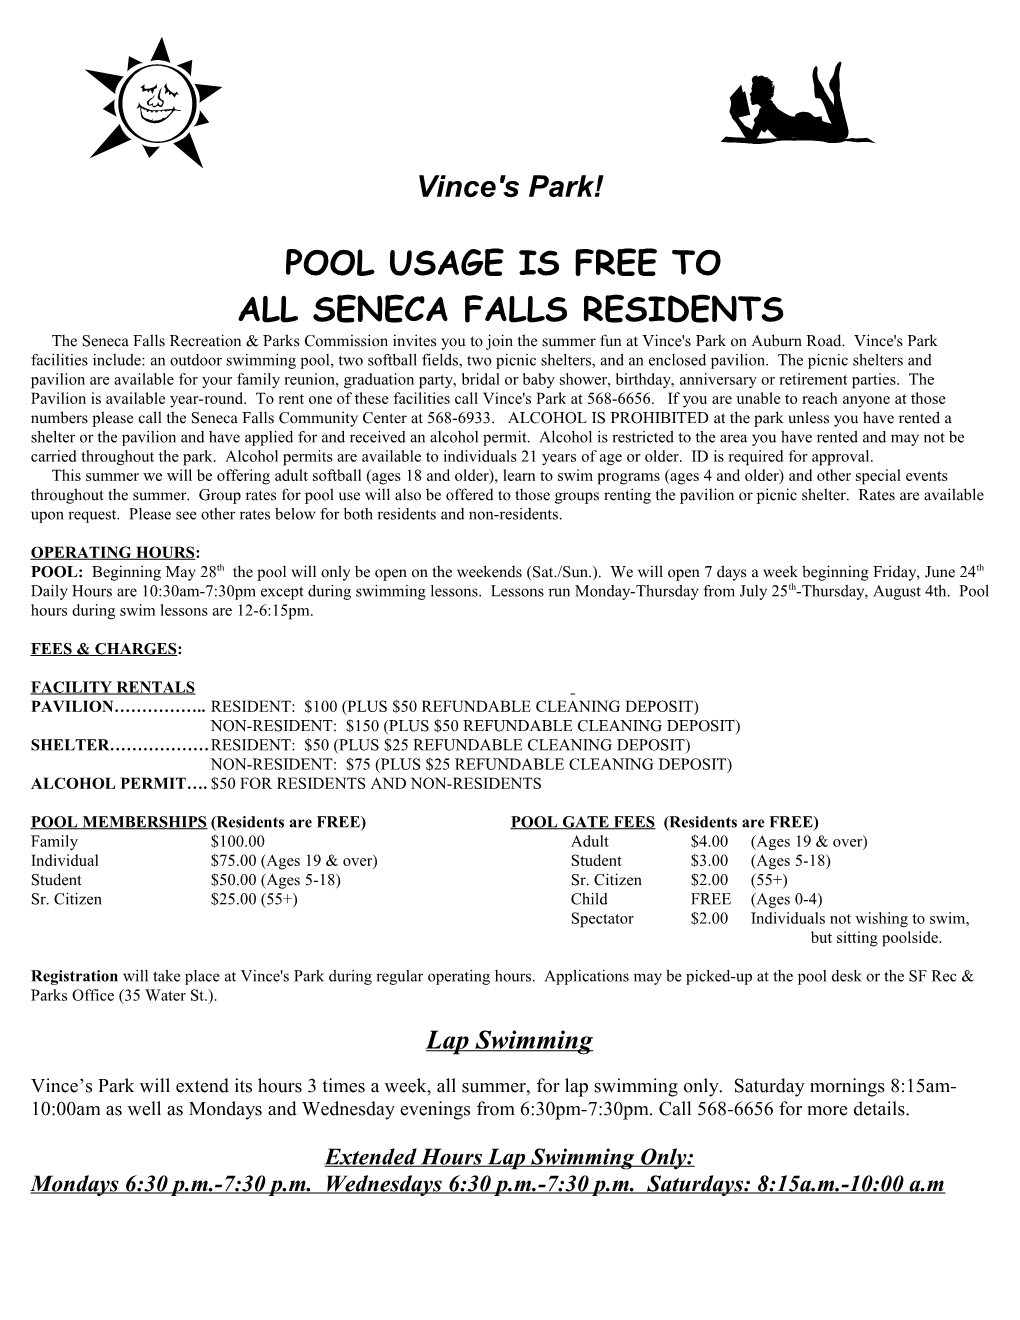 All Seneca Falls Residents